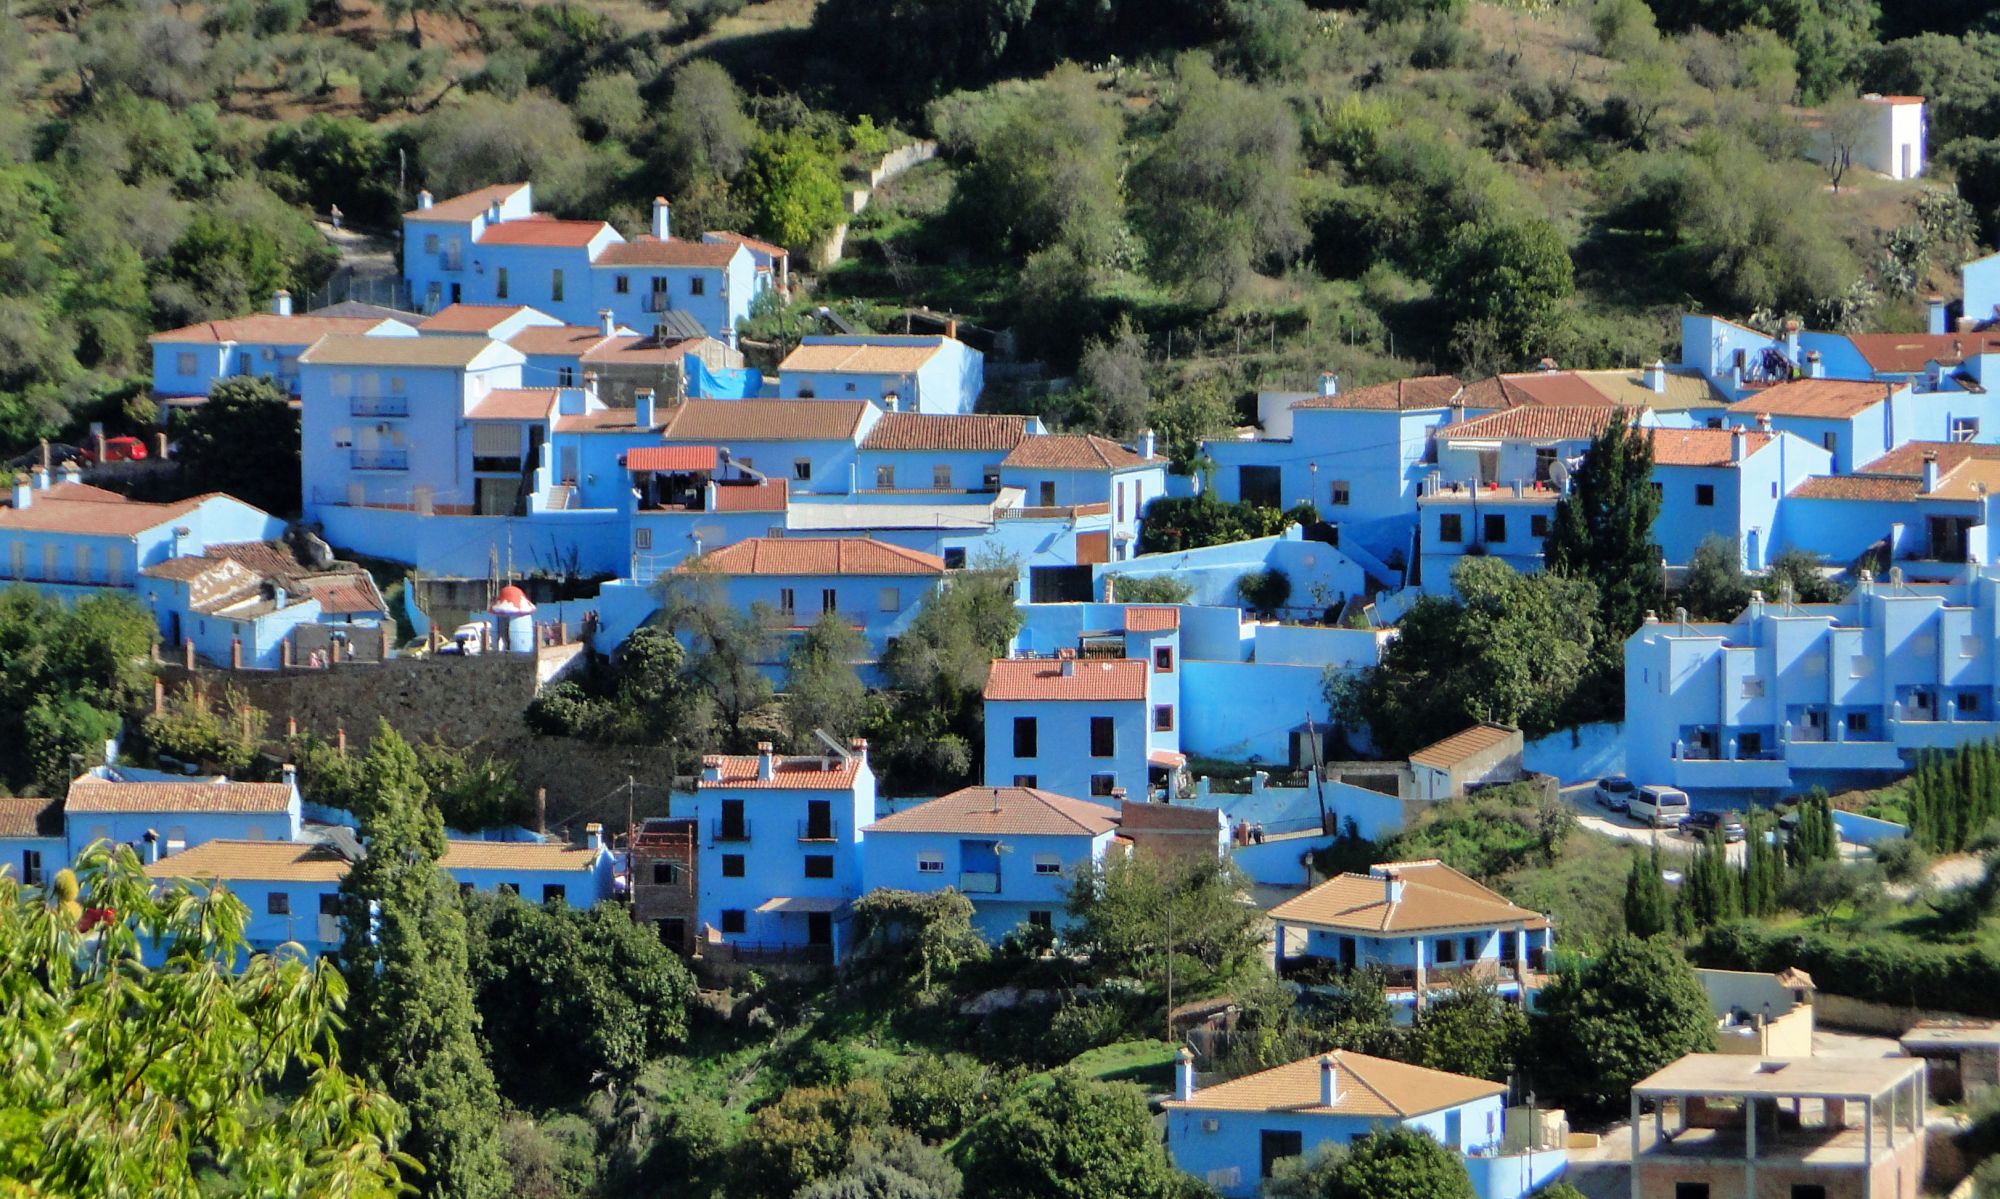 Júzcar, the Blue Village in Andalucia, Spain